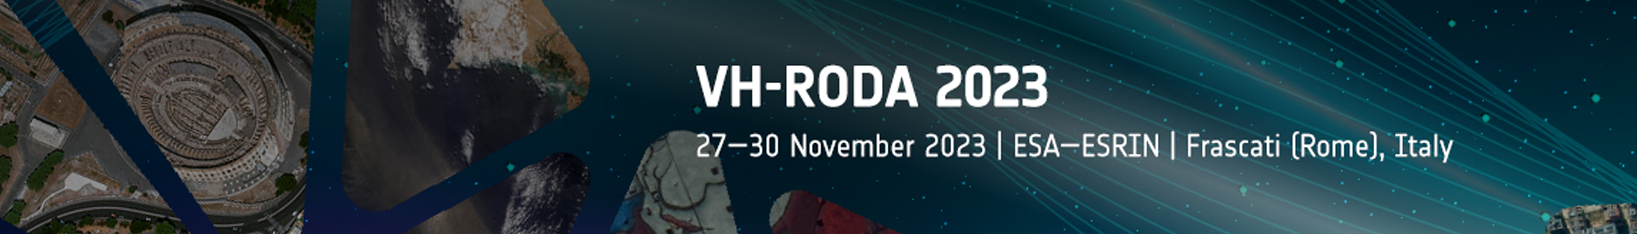 VH-RODA 2023 Workshop